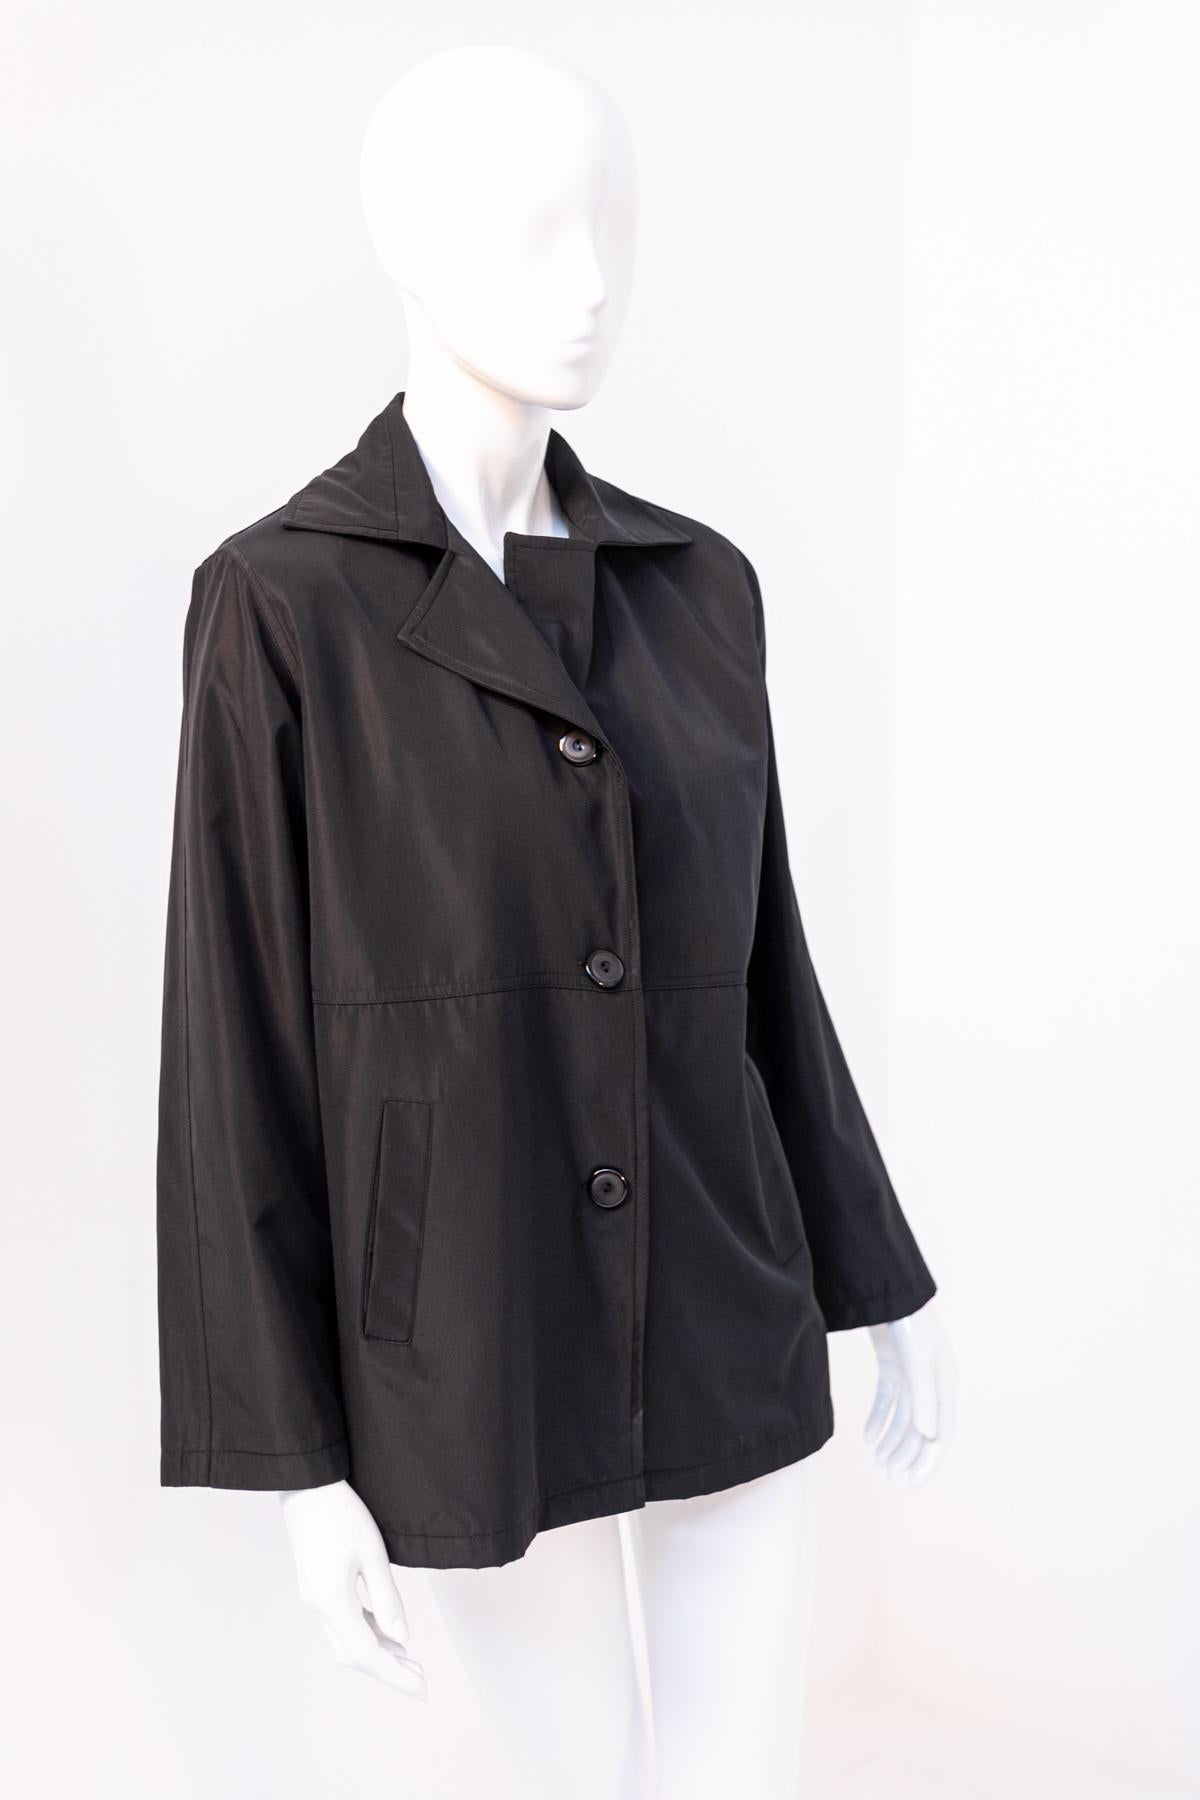 Valentino Elegant Black Trench Coat 2